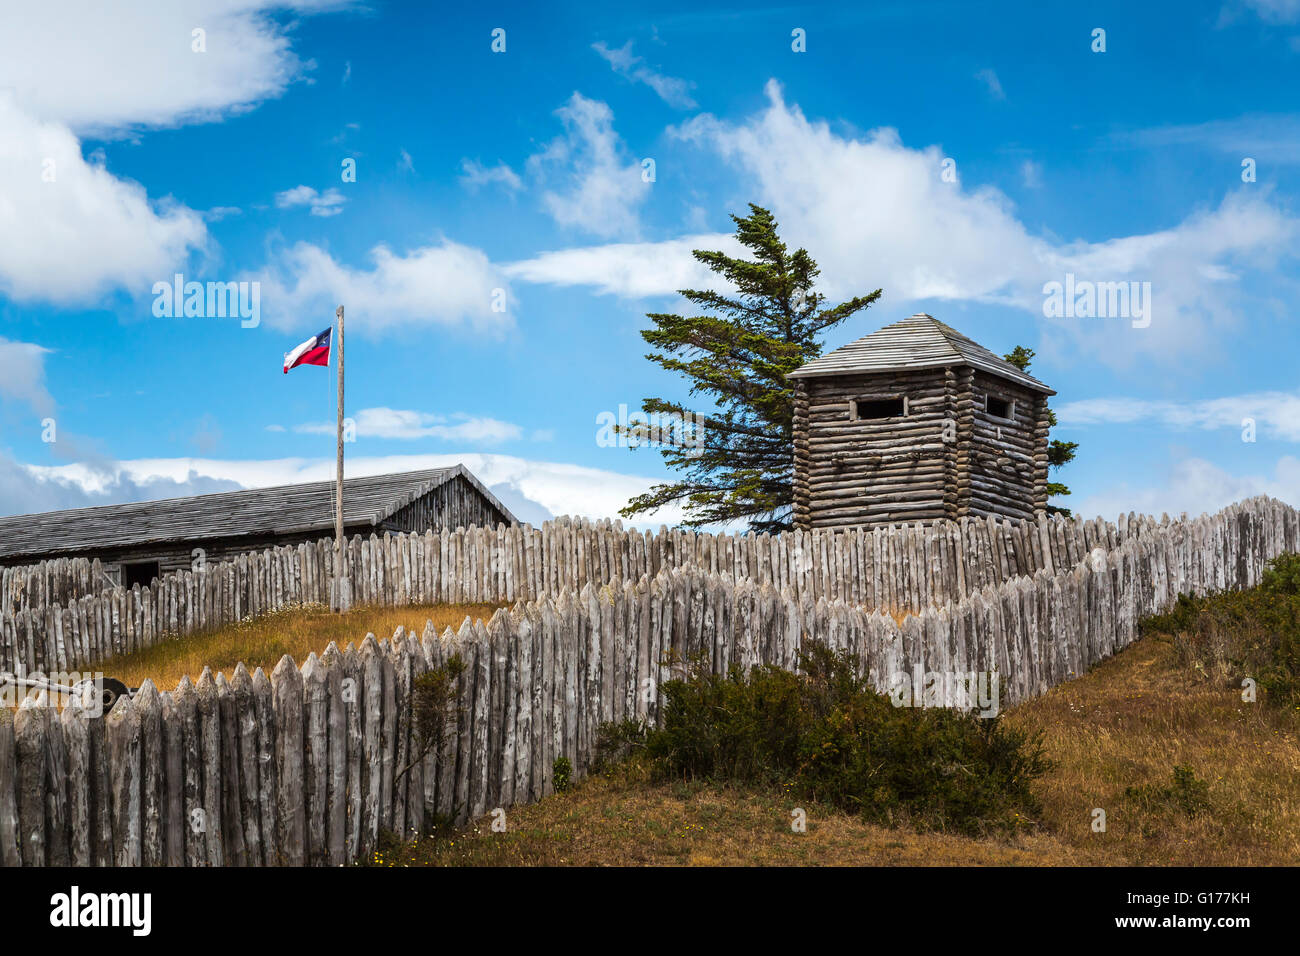 Fuerte Bulnes fort on the Strait of Magellan near Punta Arenas, Chile, South America. Stock Photo